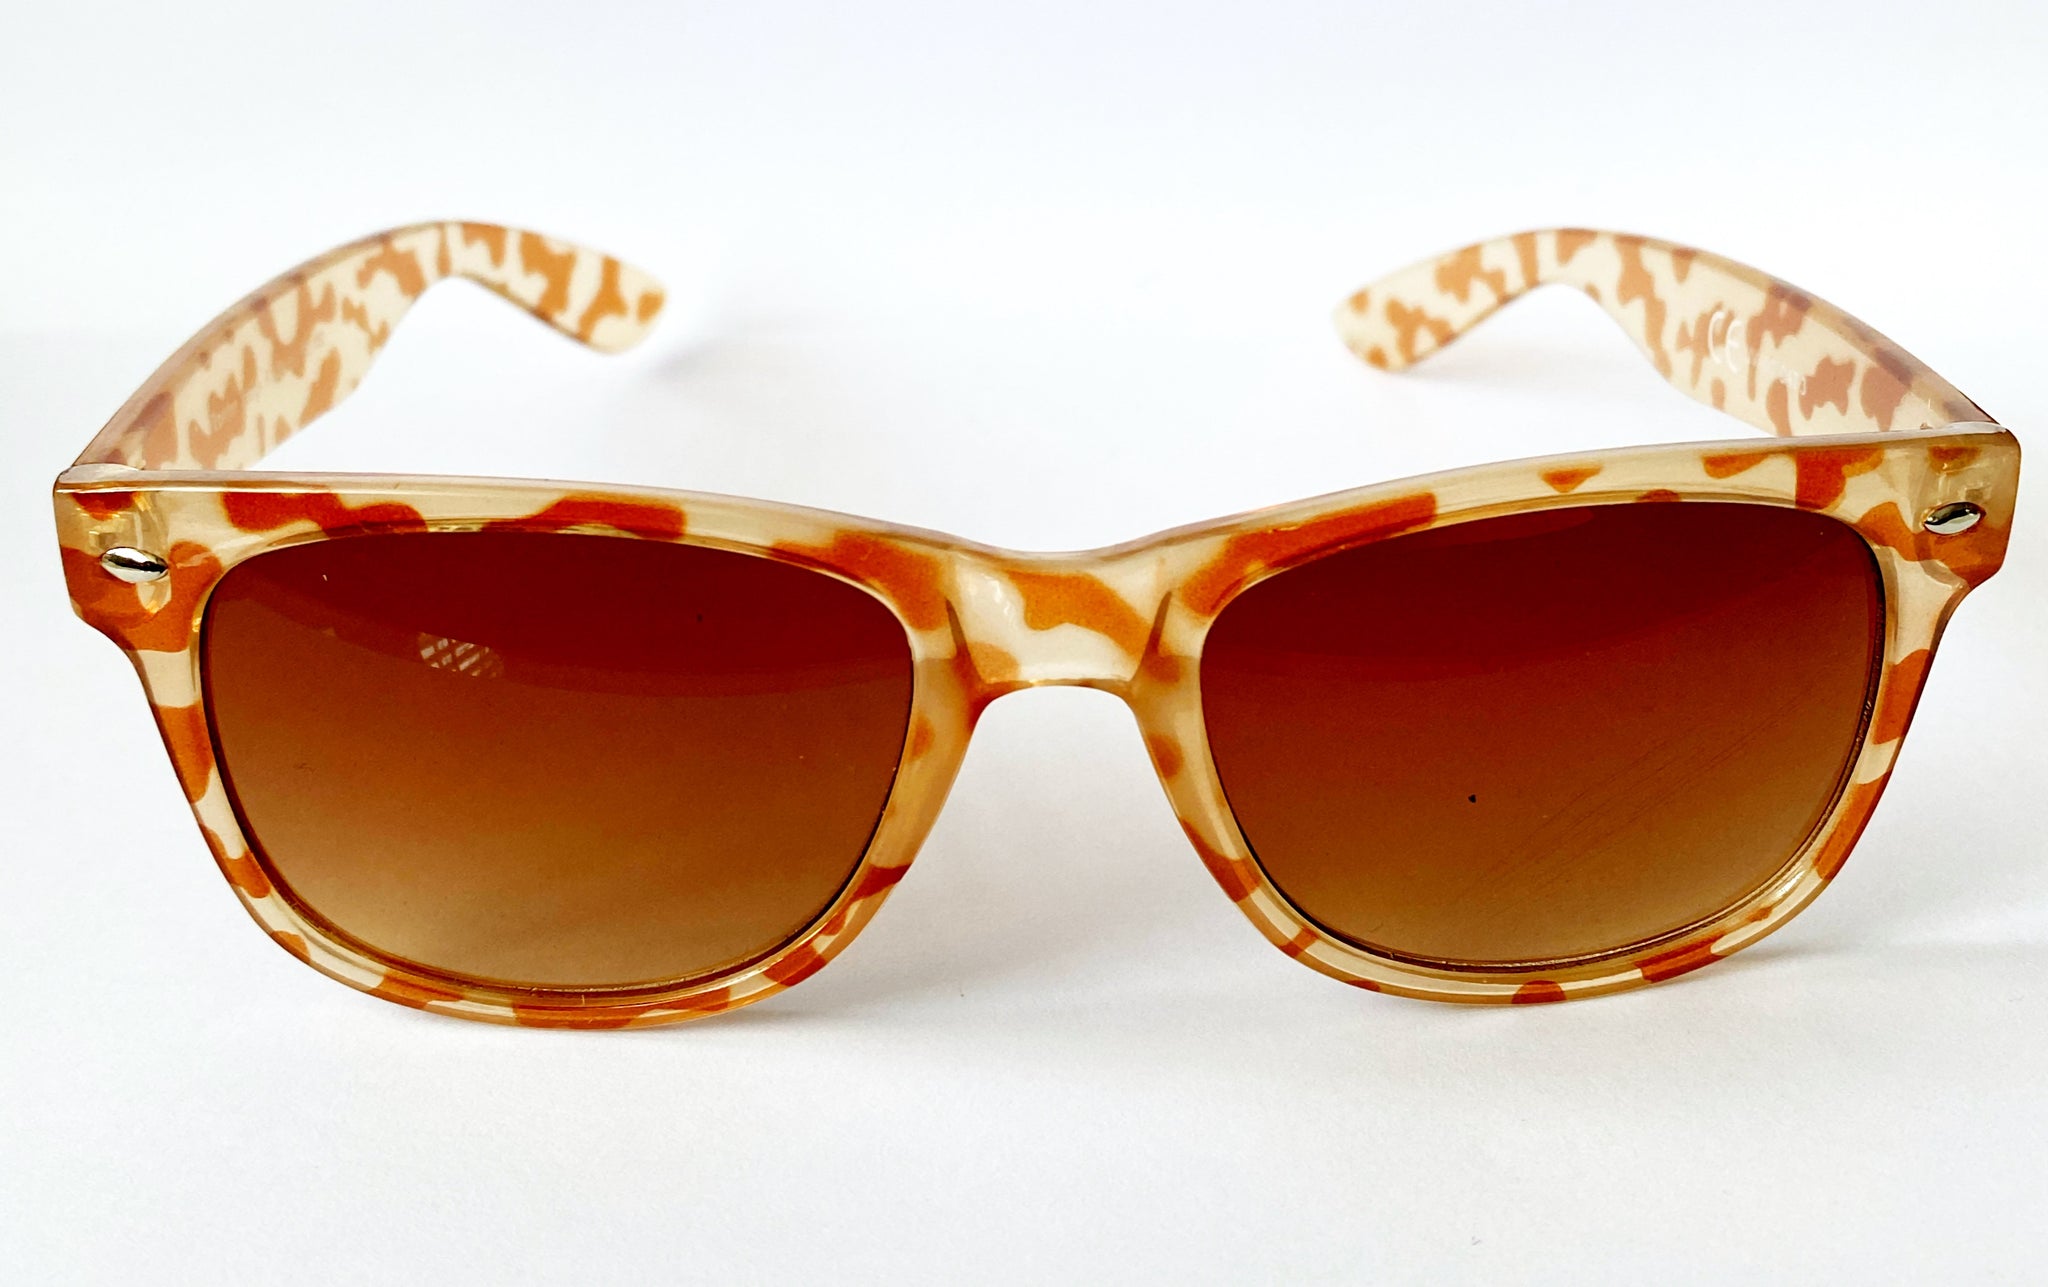 Tortoise Shell/Animal print Sunglasses